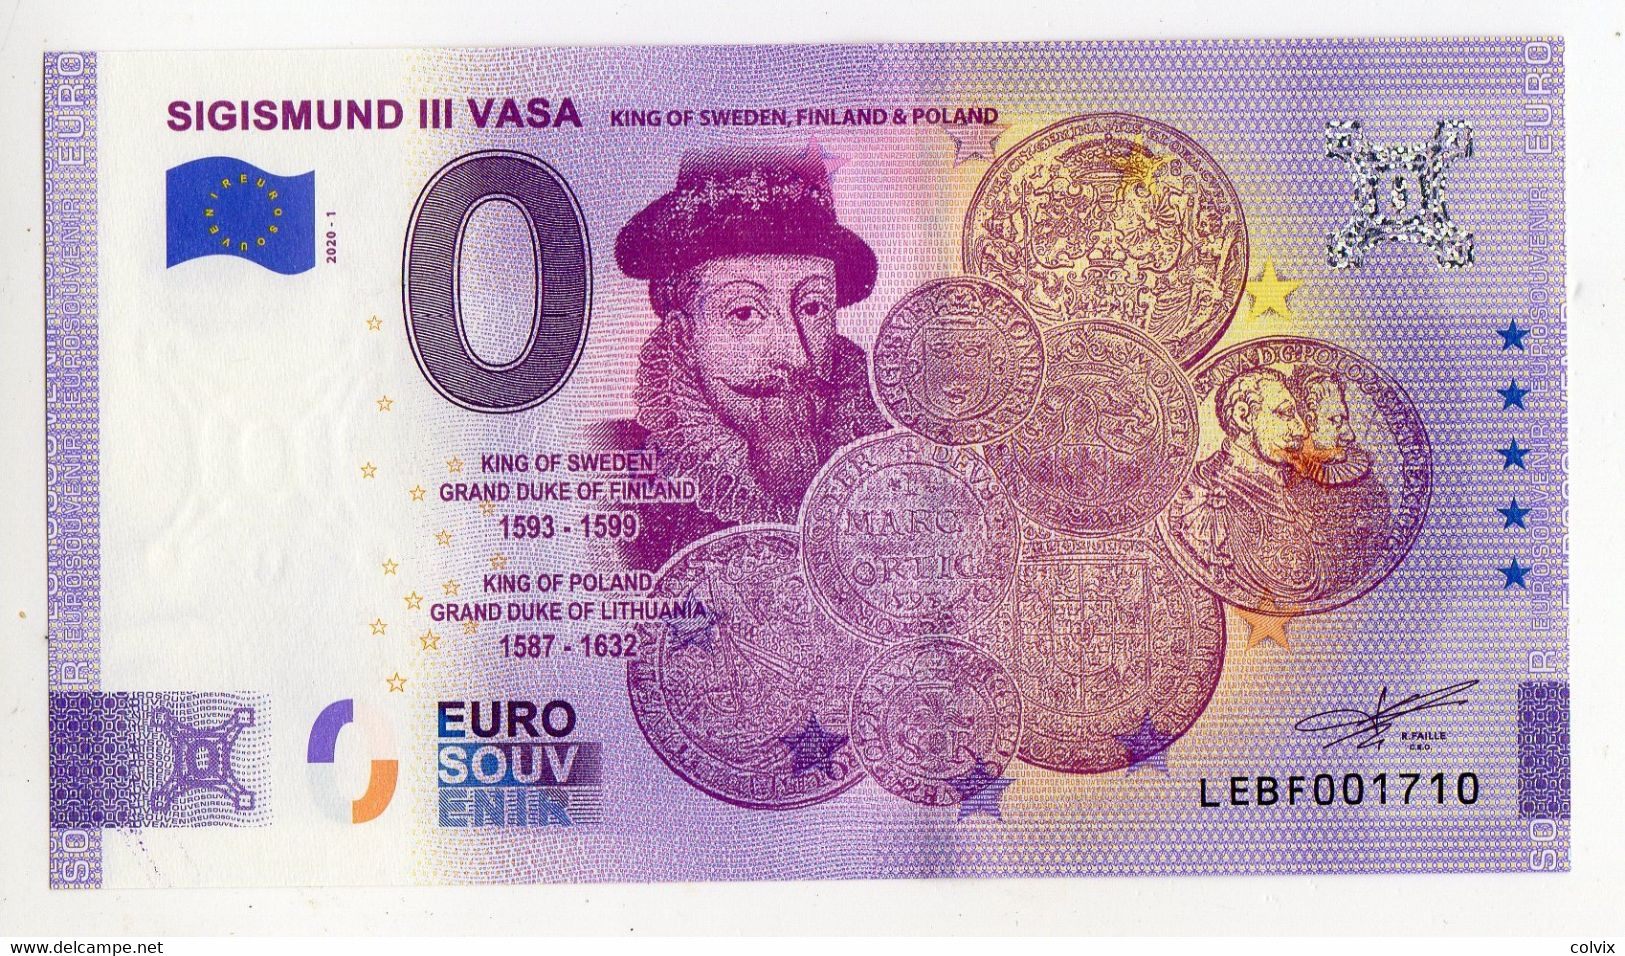 2020-1 BILLET TOURISTIQUE FINLANDE 0 EURO SOUVENIR N° LEBF001710 SIGISMUND III VASA (monnaie) - Pruebas Privadas